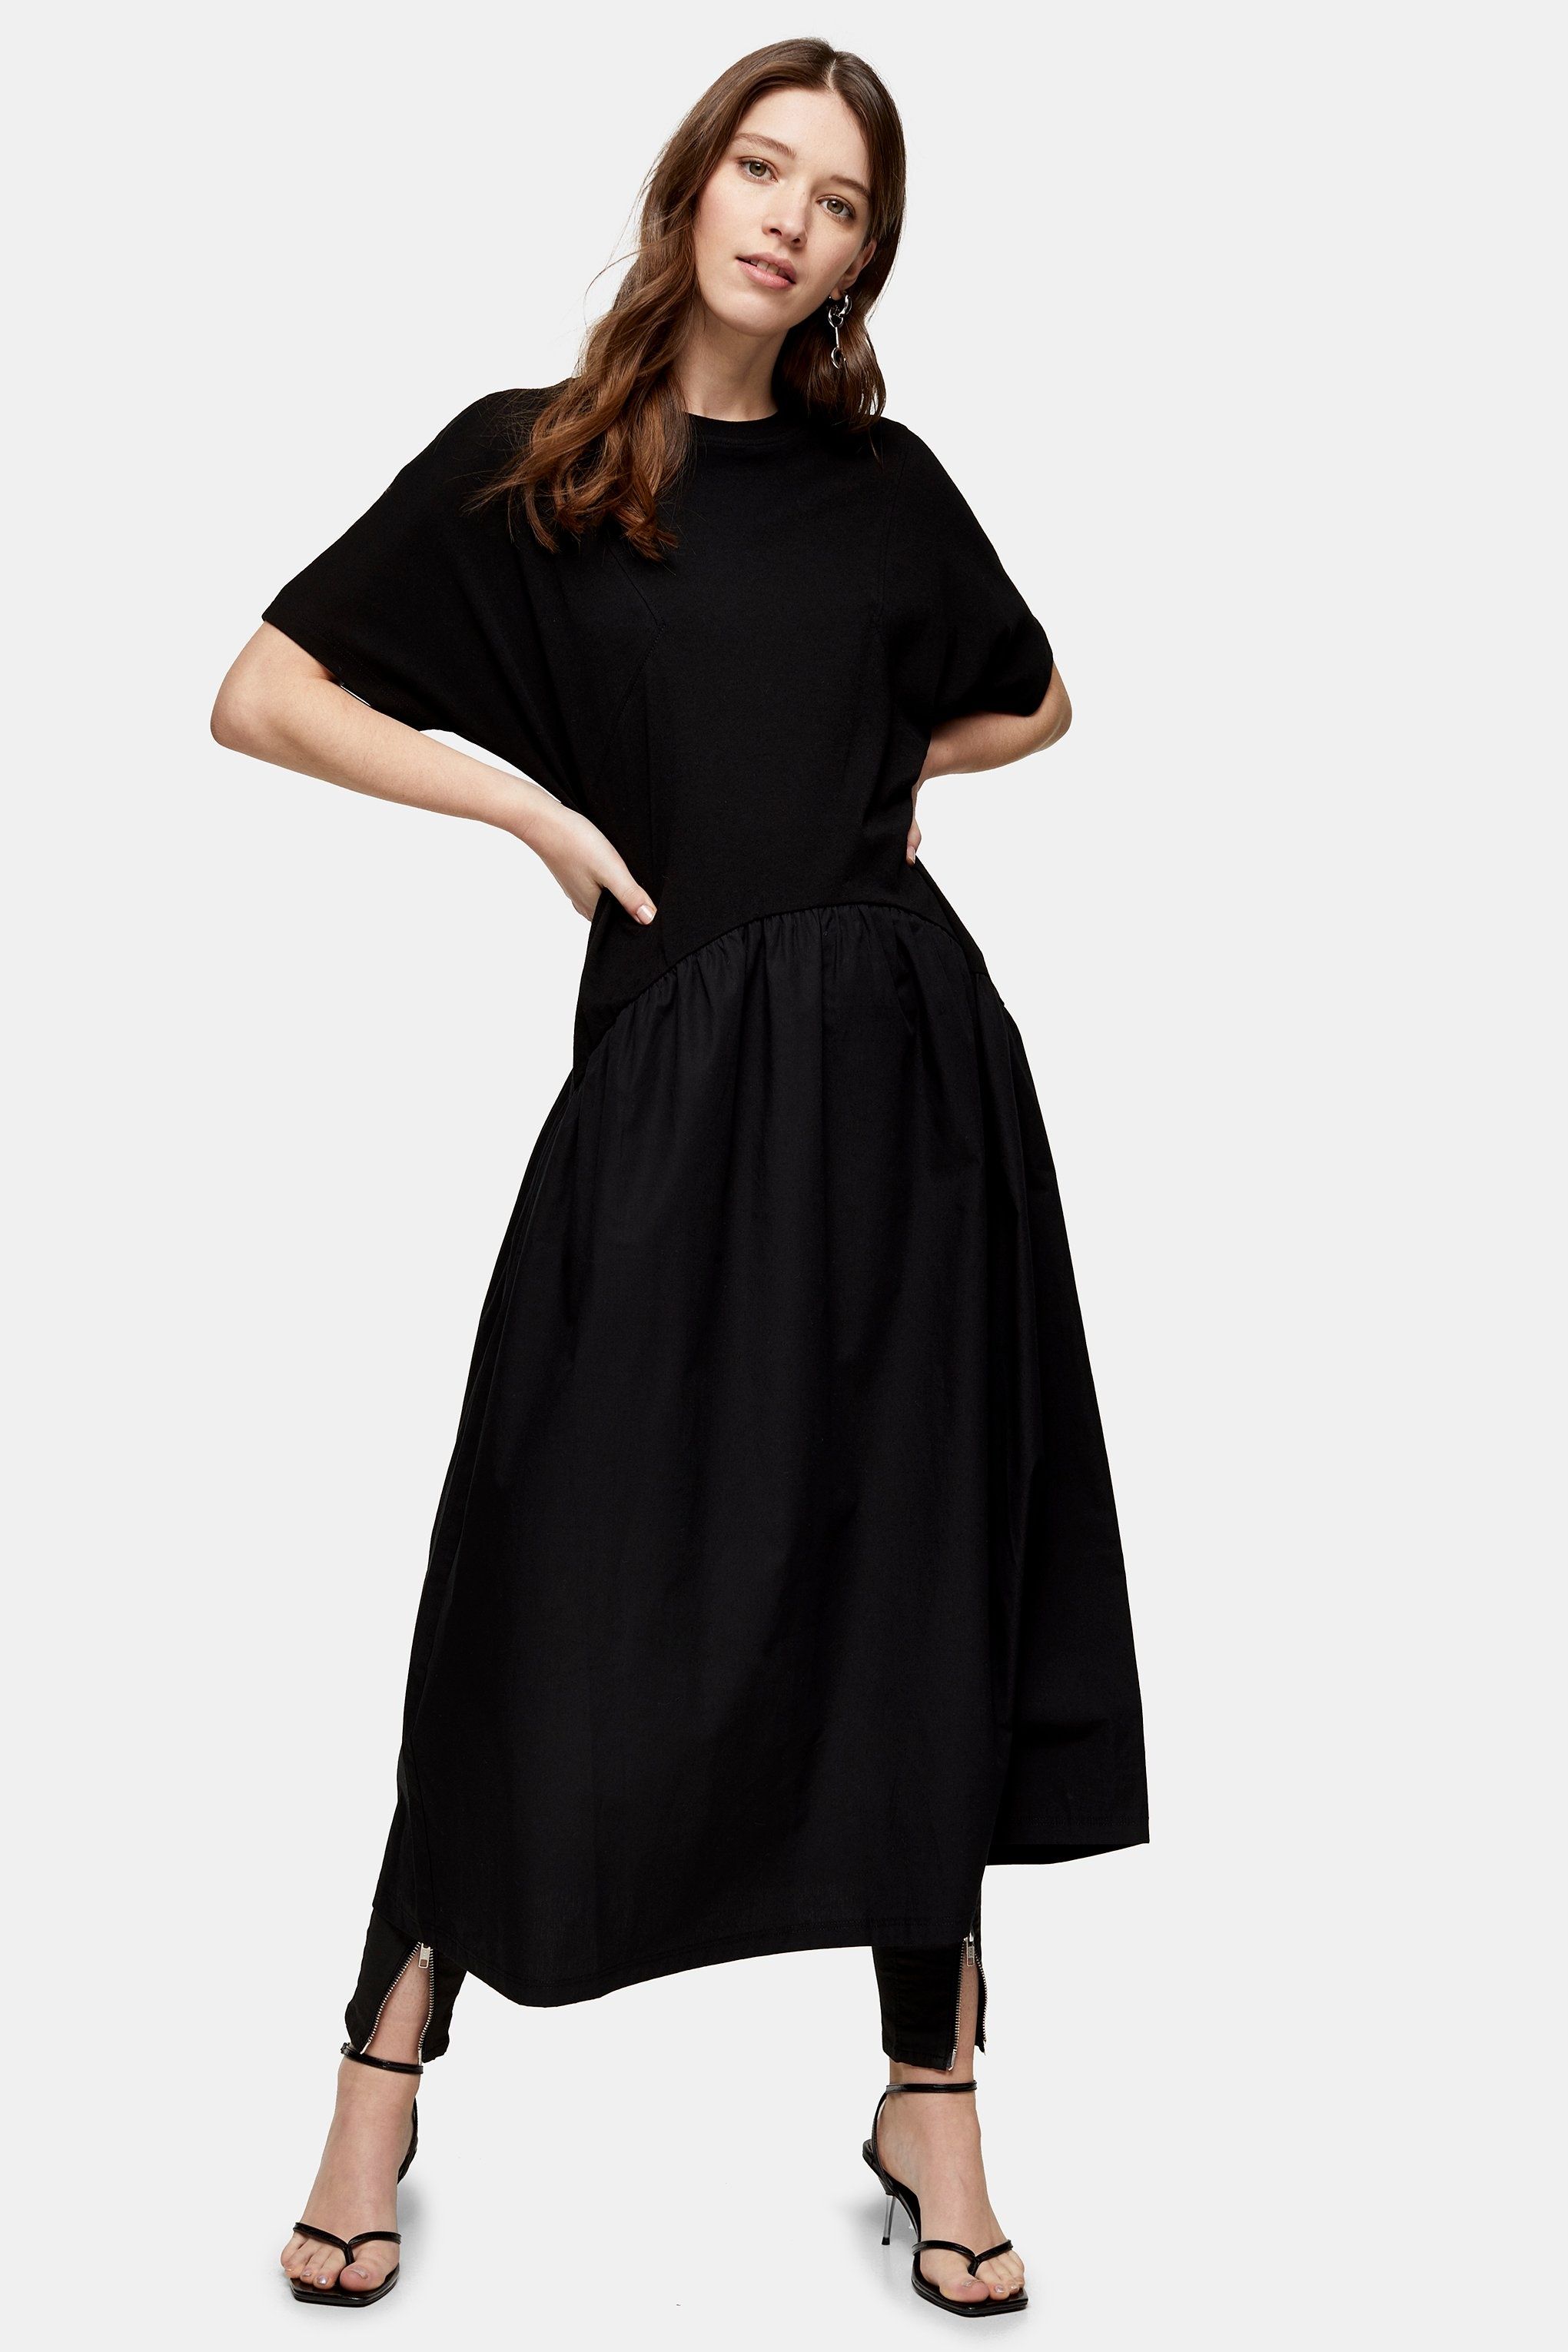 long sleeve black funeral dress